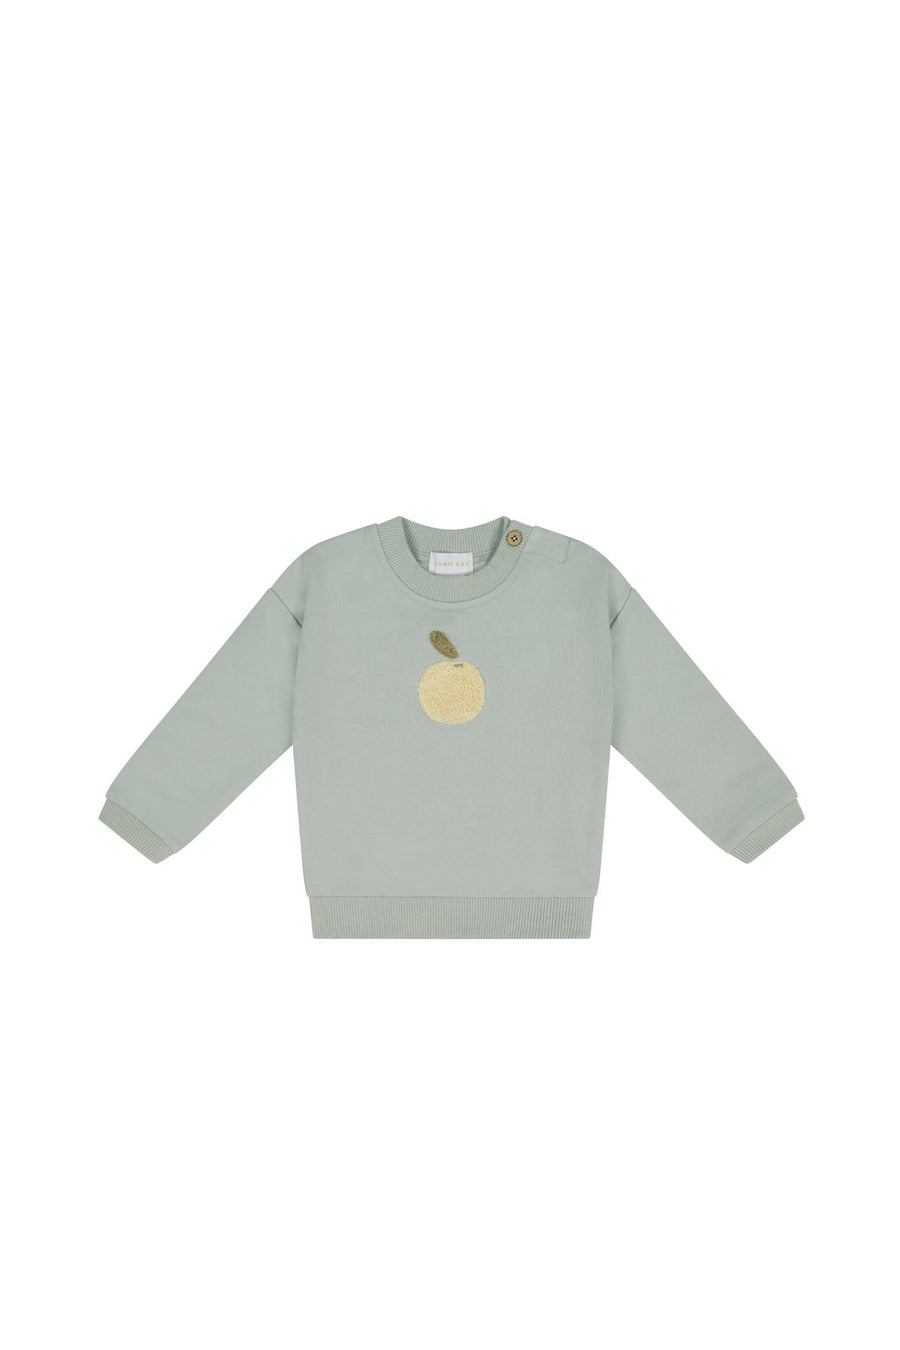 Organic Cotton Asher Sweatshirt - Mineral Childrens Sweatshirting from Jamie Kay NZ